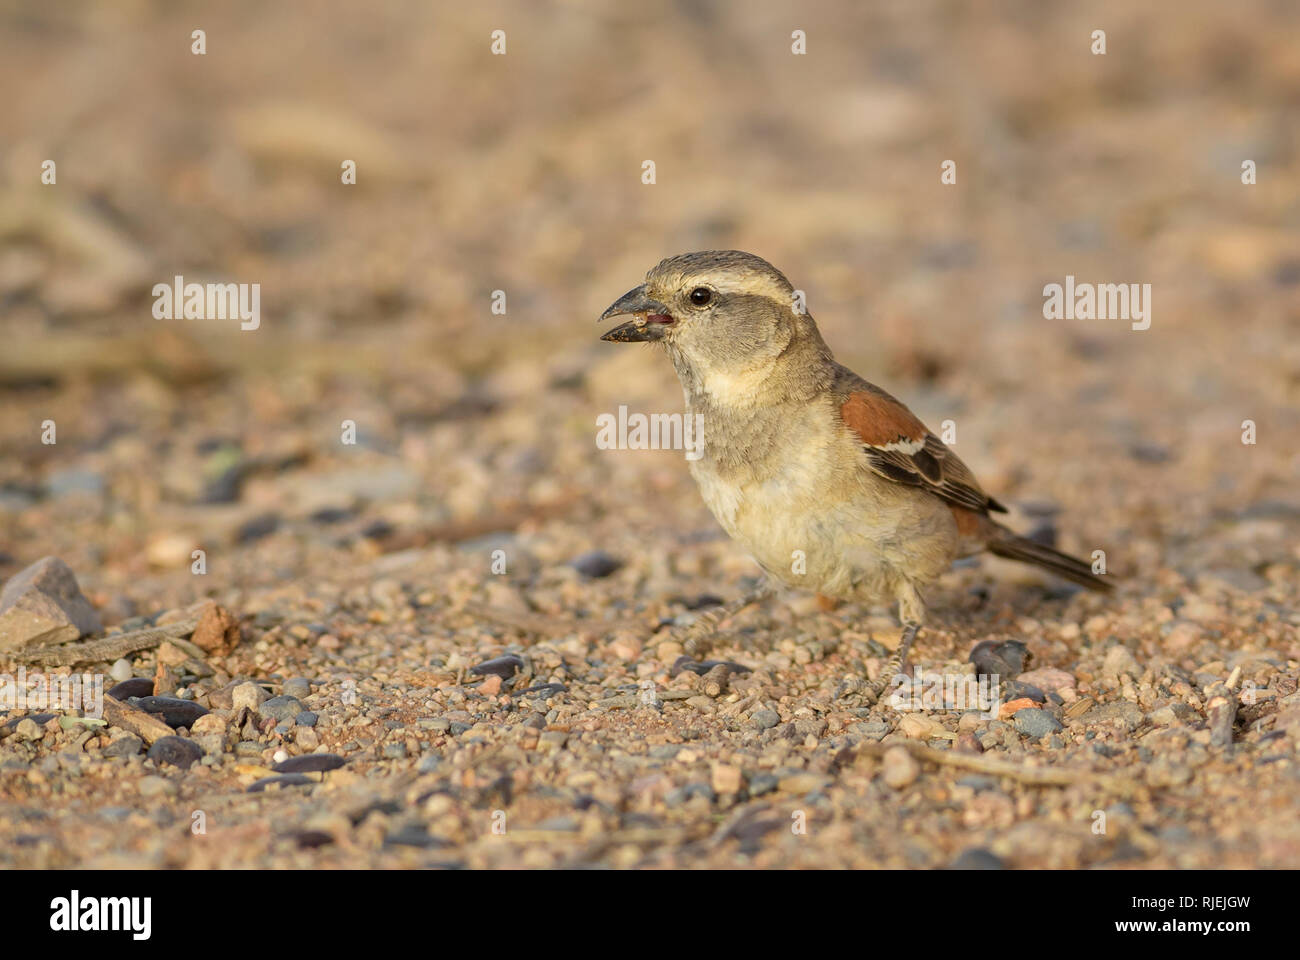 Cape Sparrow - Passer melanurus, common passerine bird from southern Africa, Sossusvlei, Namibia. Stock Photo